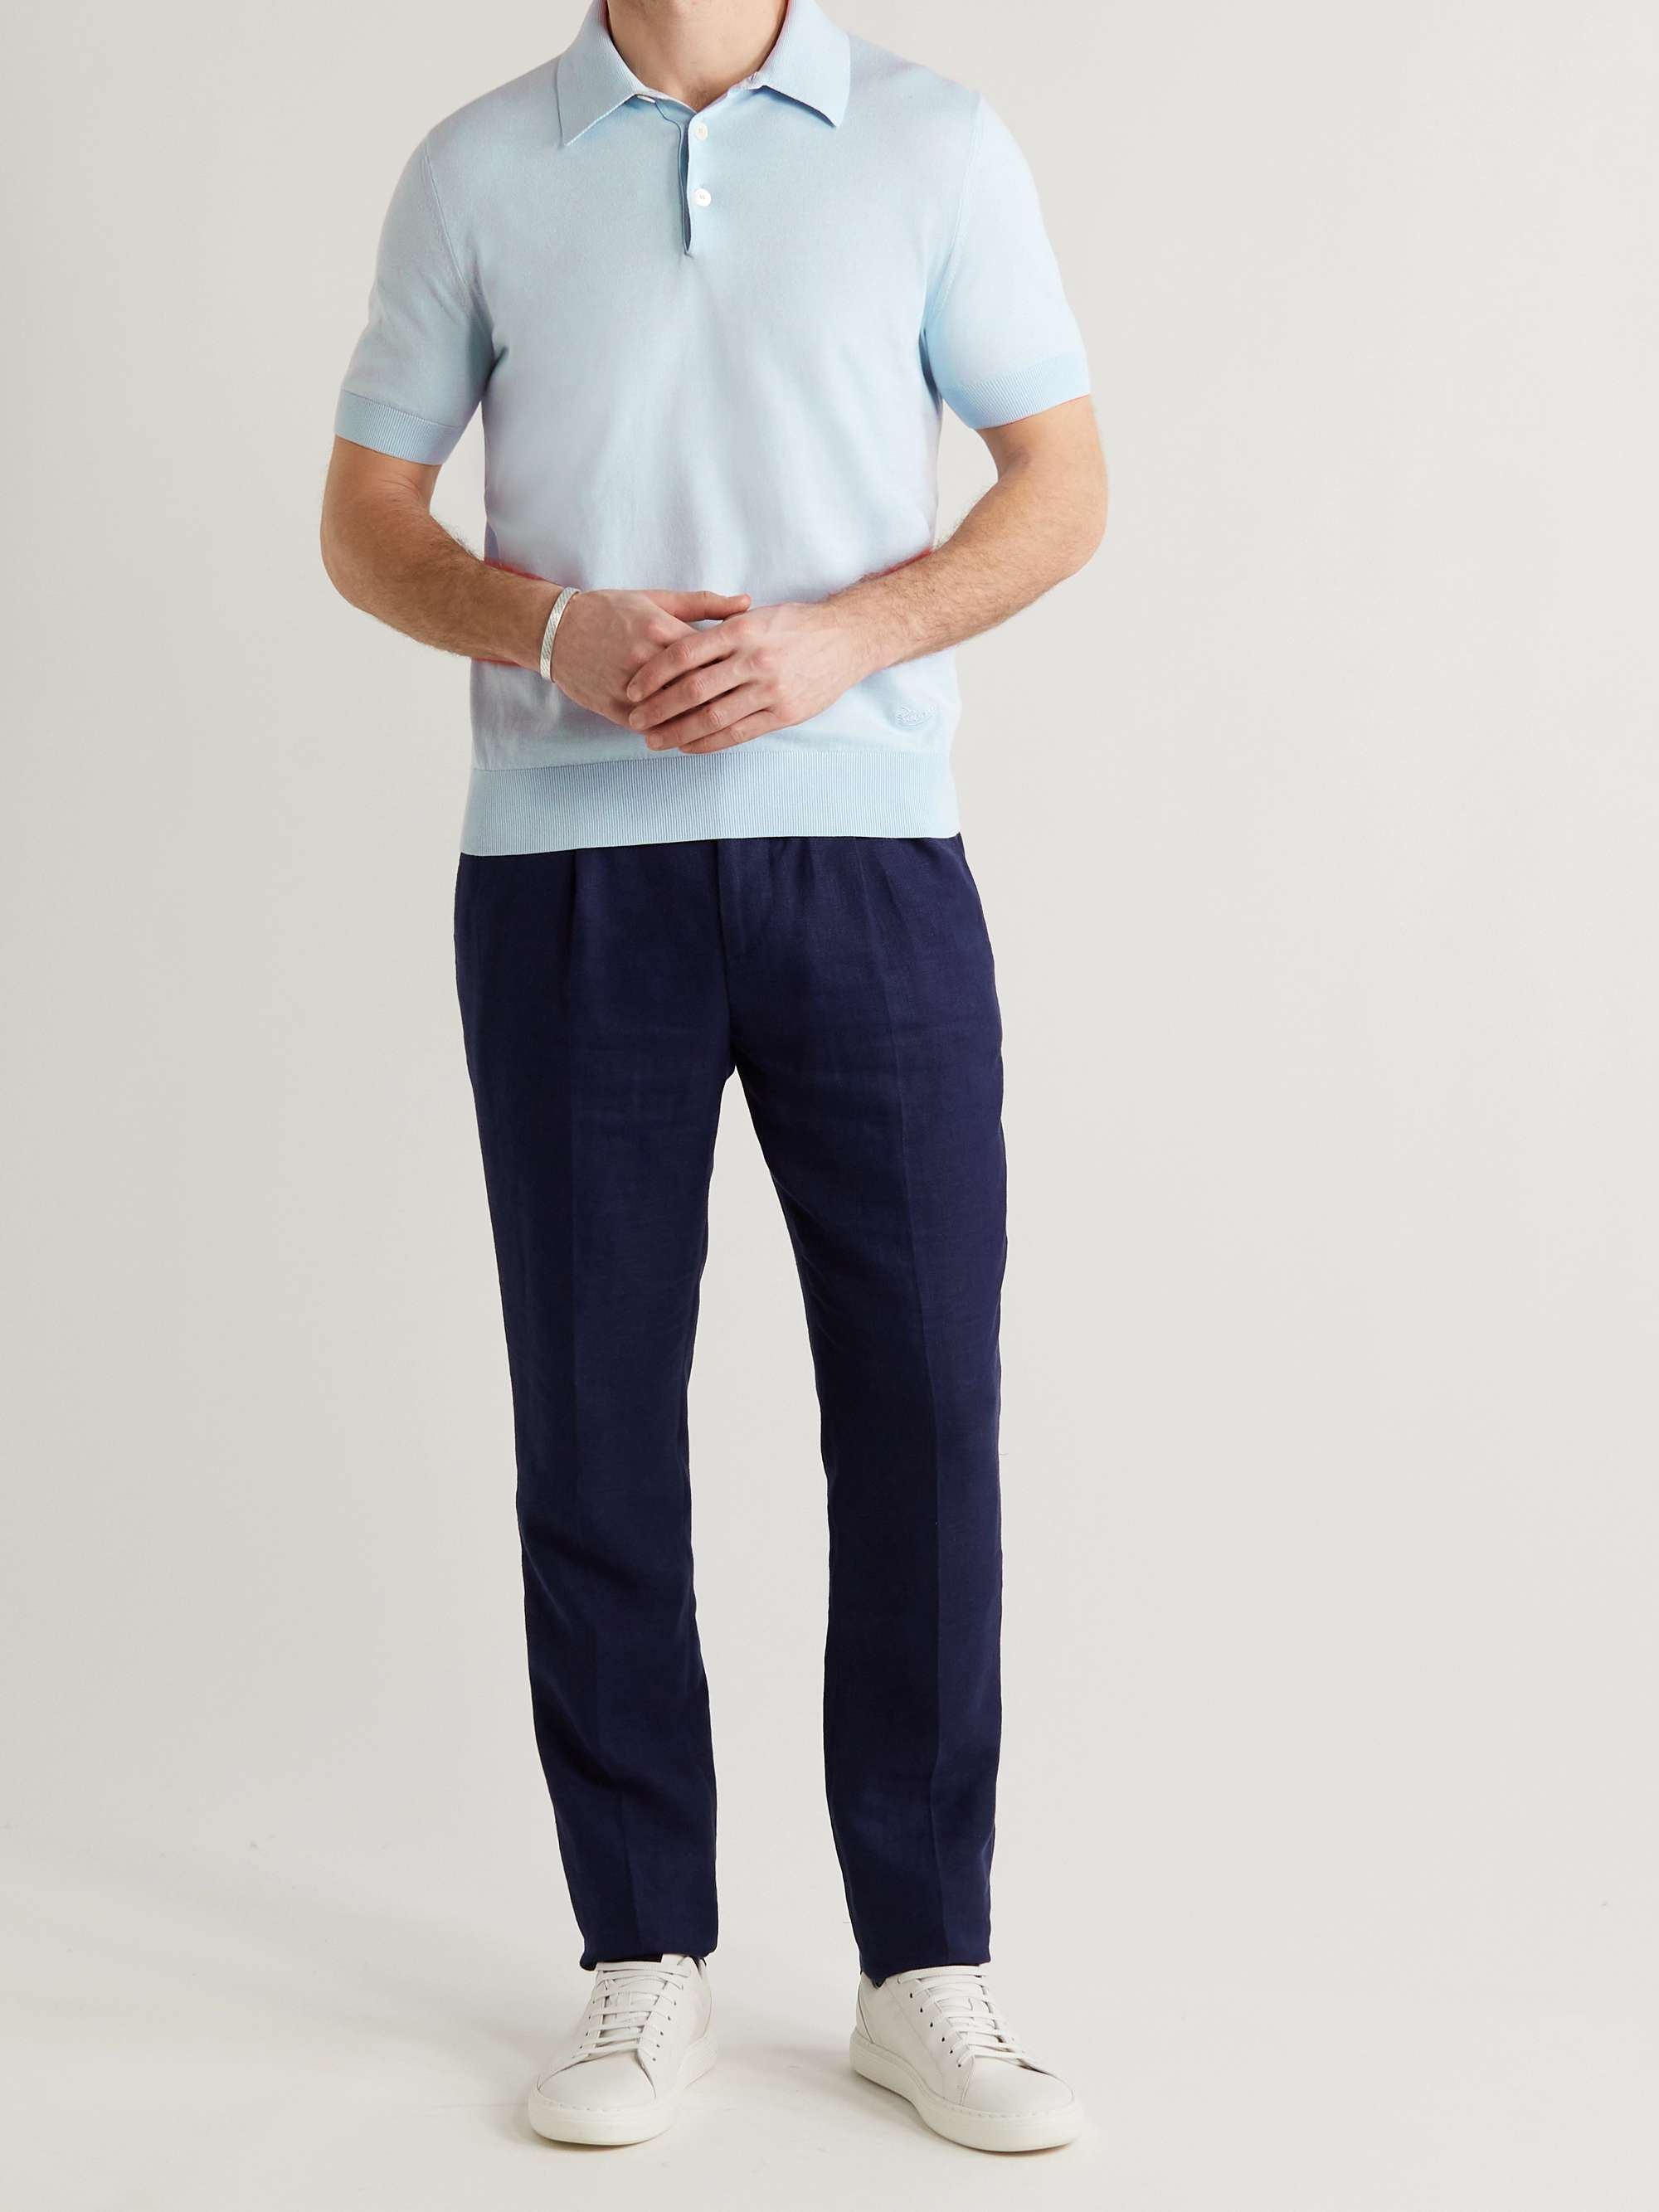 Storm blue SPEZIAL Slim-Fit Knitted Polo Shirt | ADIDAS CONSORTIUM | MR  PORTER